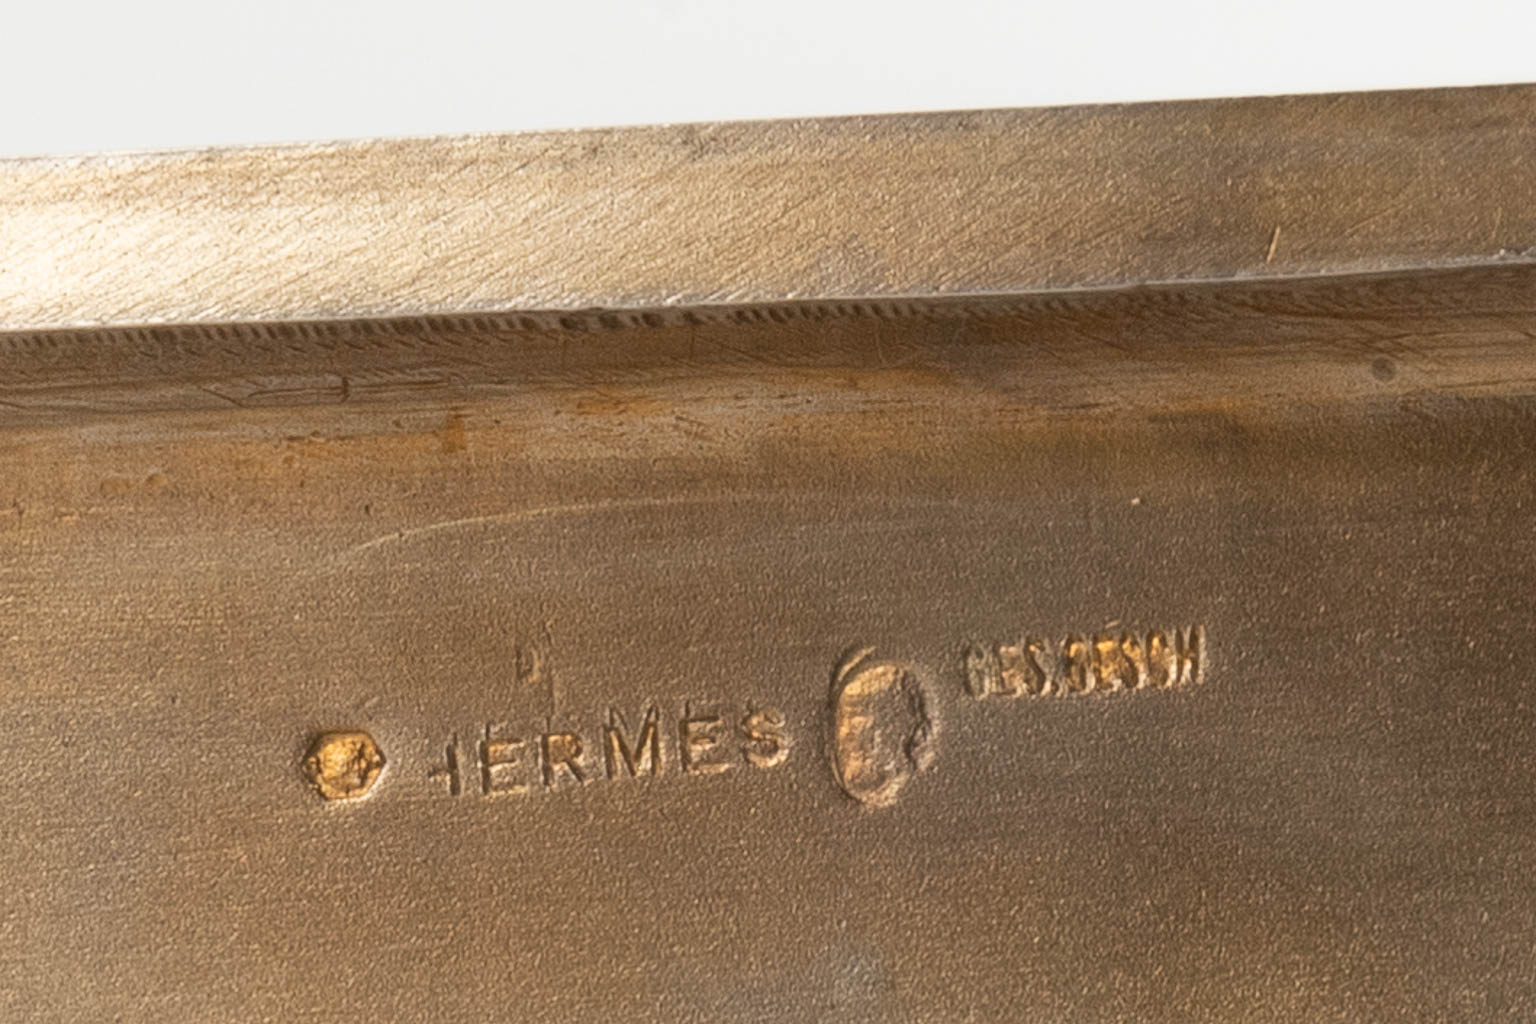 Hermès Paris, een sigarettendoos, zilver (W:11 x H:9 cm)